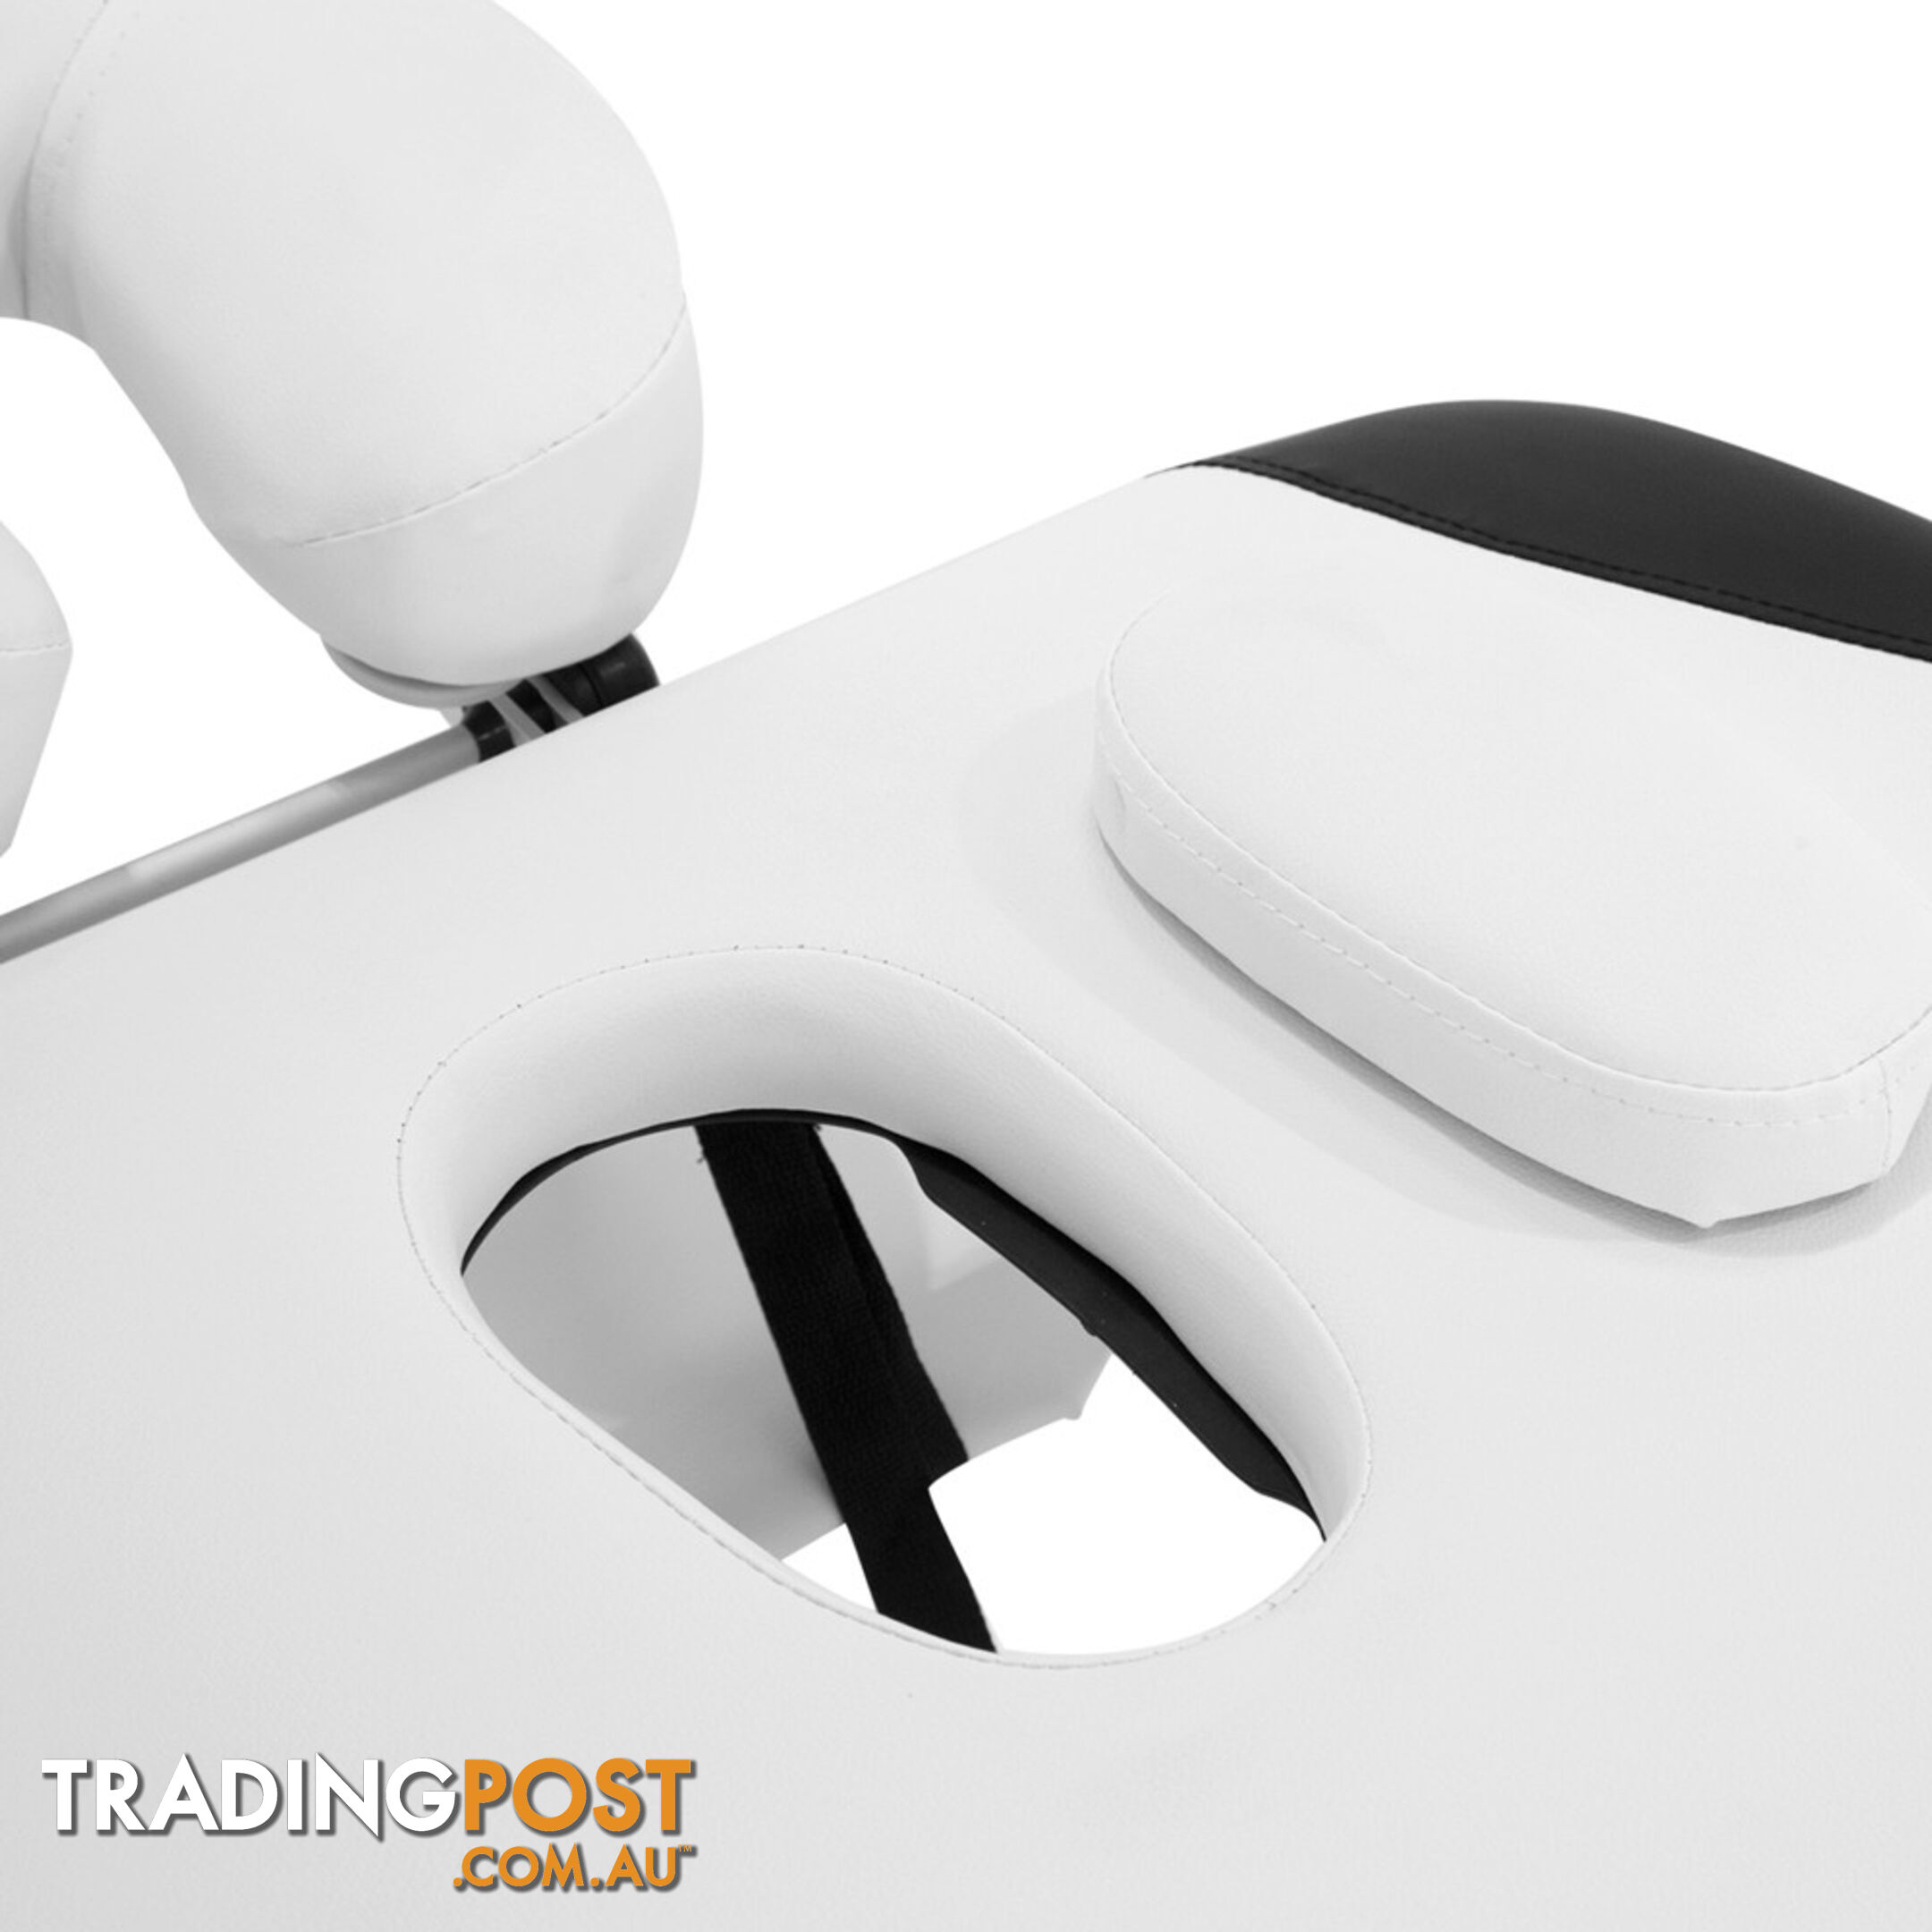 Portable Aluminium 3 Fold Massage Table Chair Bed Black White 75cm